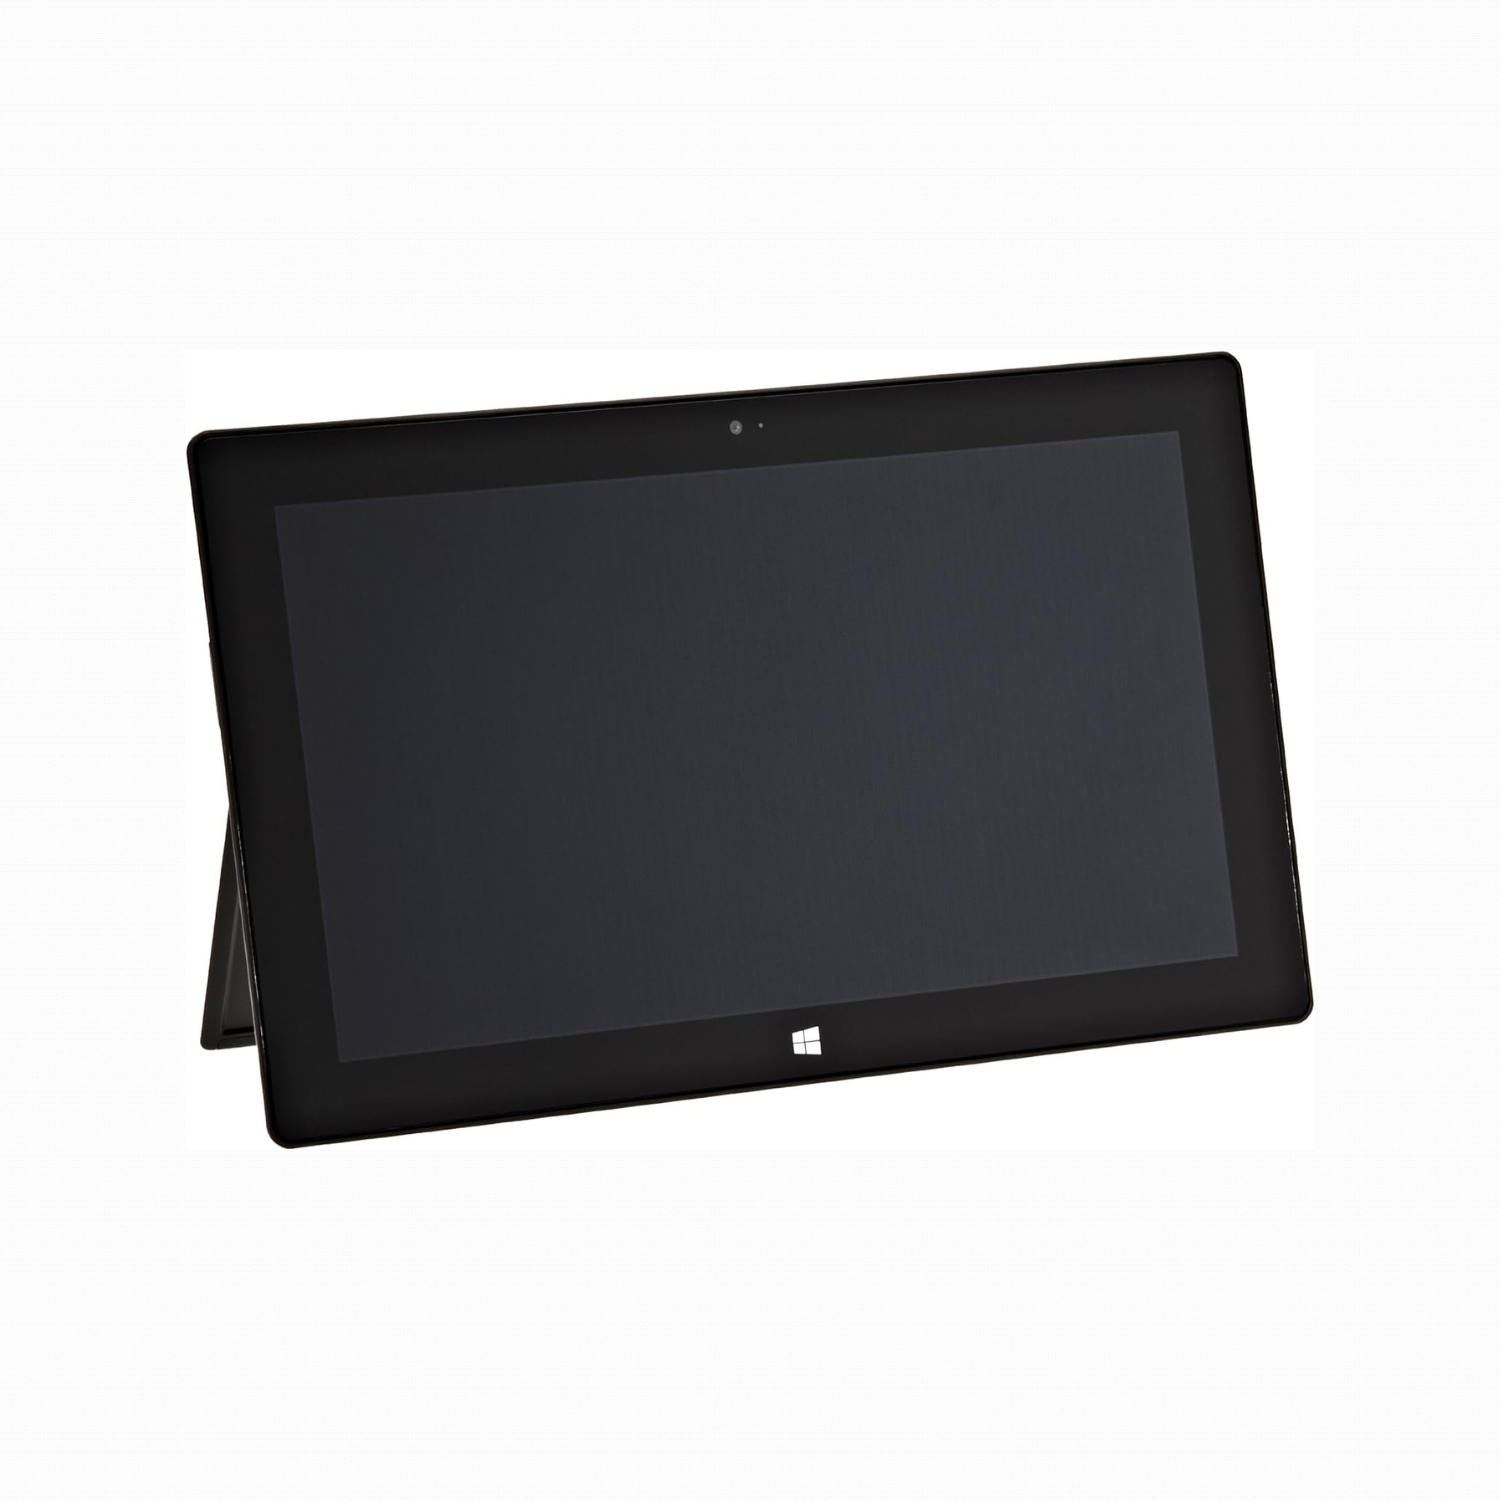 Microsoft Surface 2 RT 10.6" Tablet - NVIDIA(R) 3 QUAD CORE / 2GB RAM / 32GB SSD